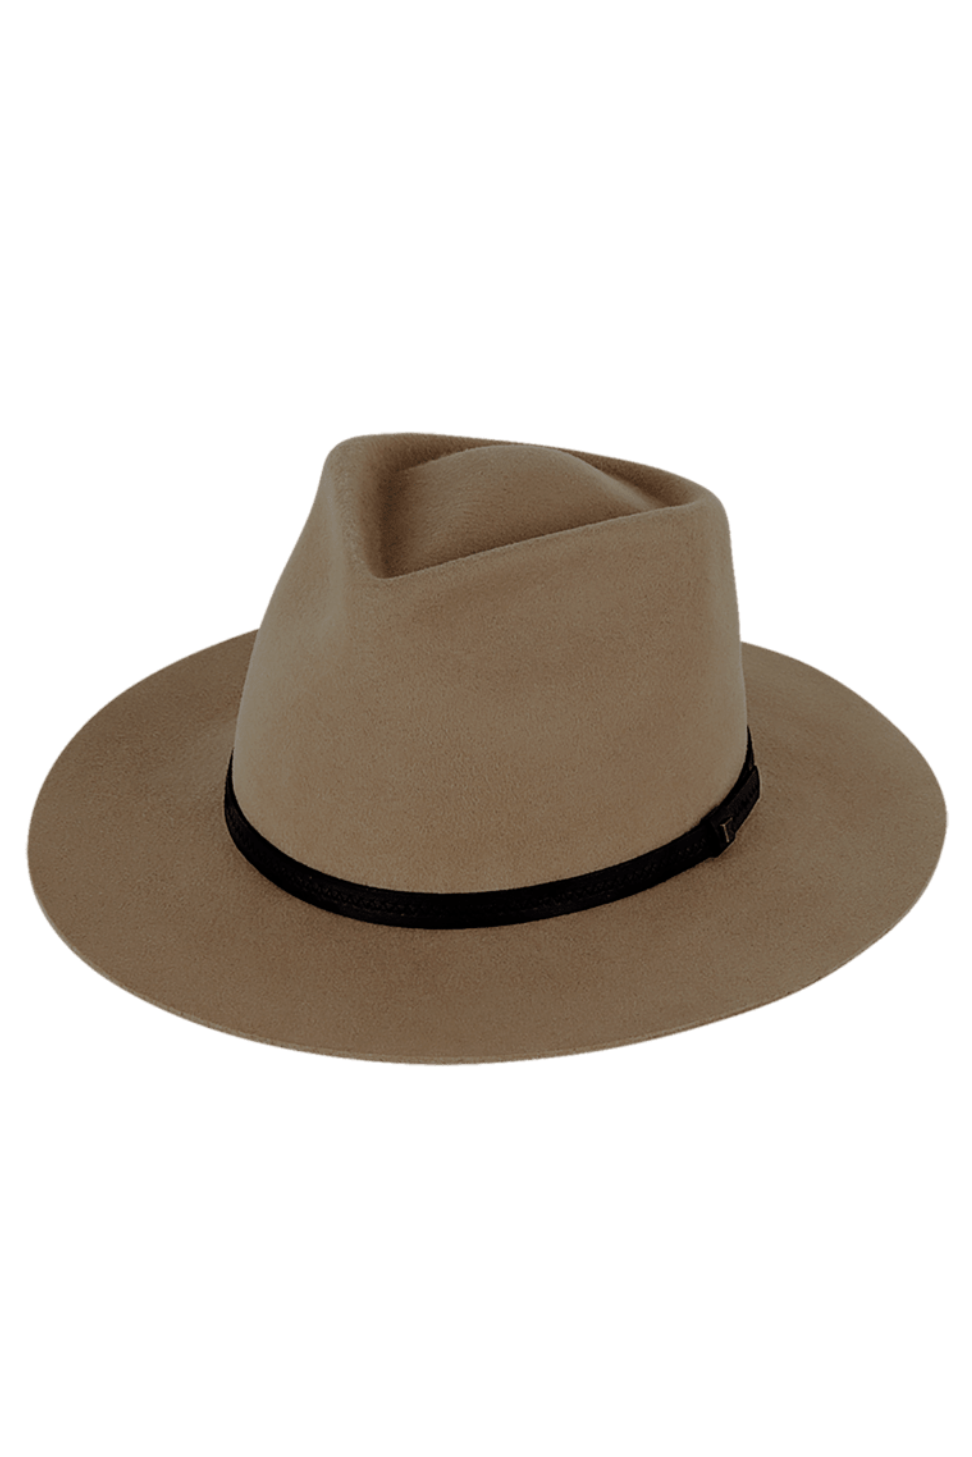 Kooringal Unisex Fedora - Goodwin Wide Brim 100% Australian Wool Hat ...